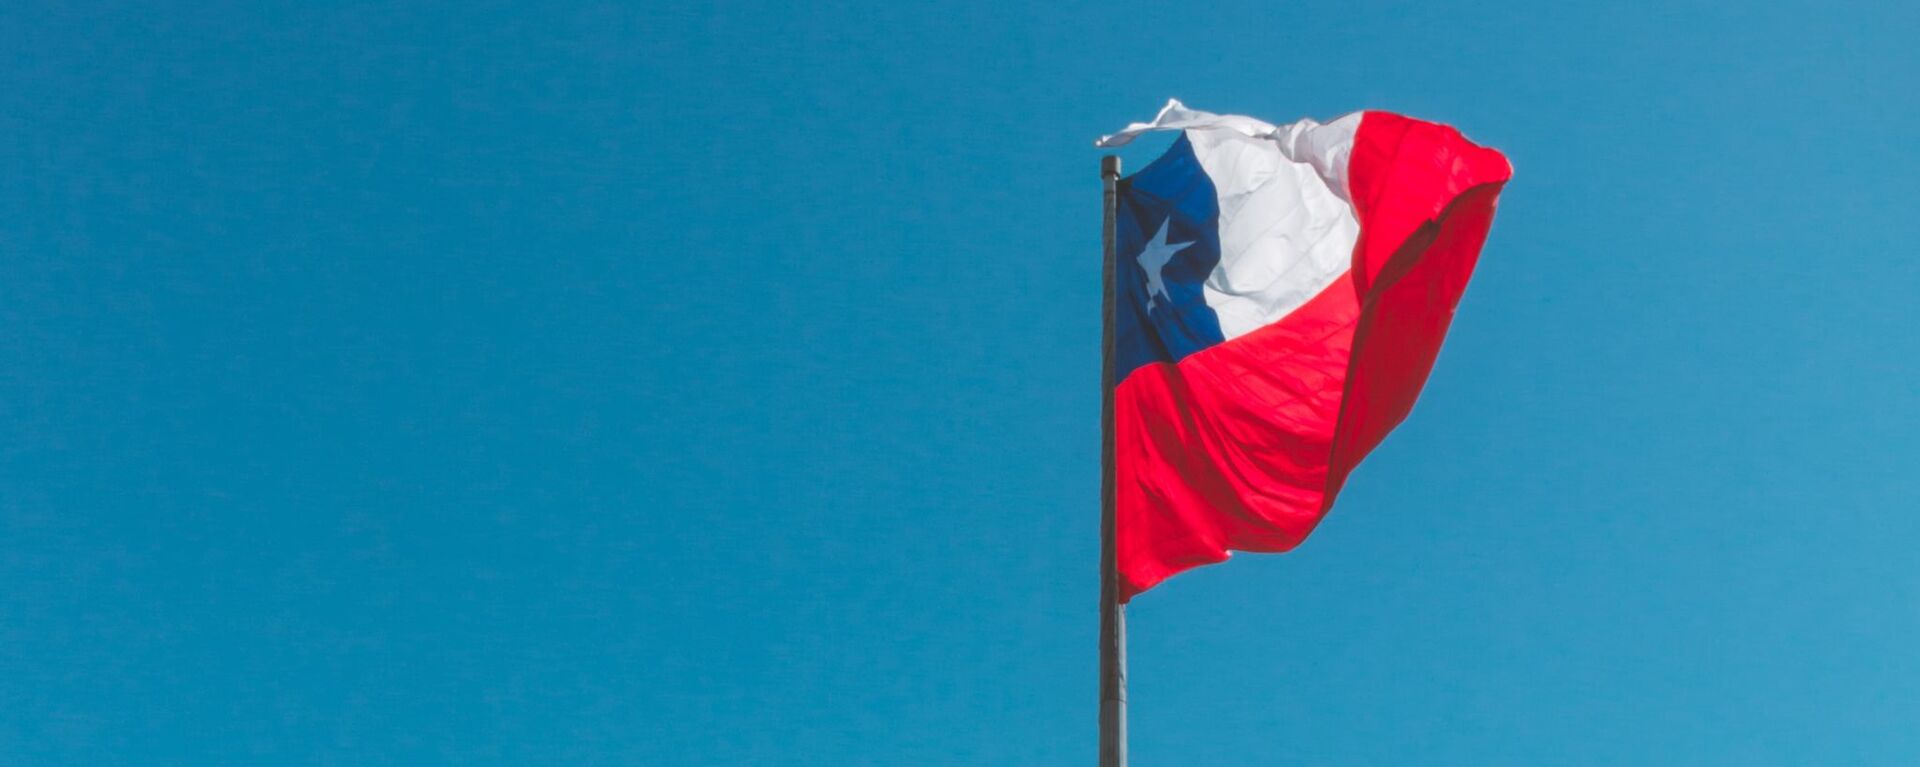 La bandera de Chile - Sputnik Mundo, 1920, 27.04.2021